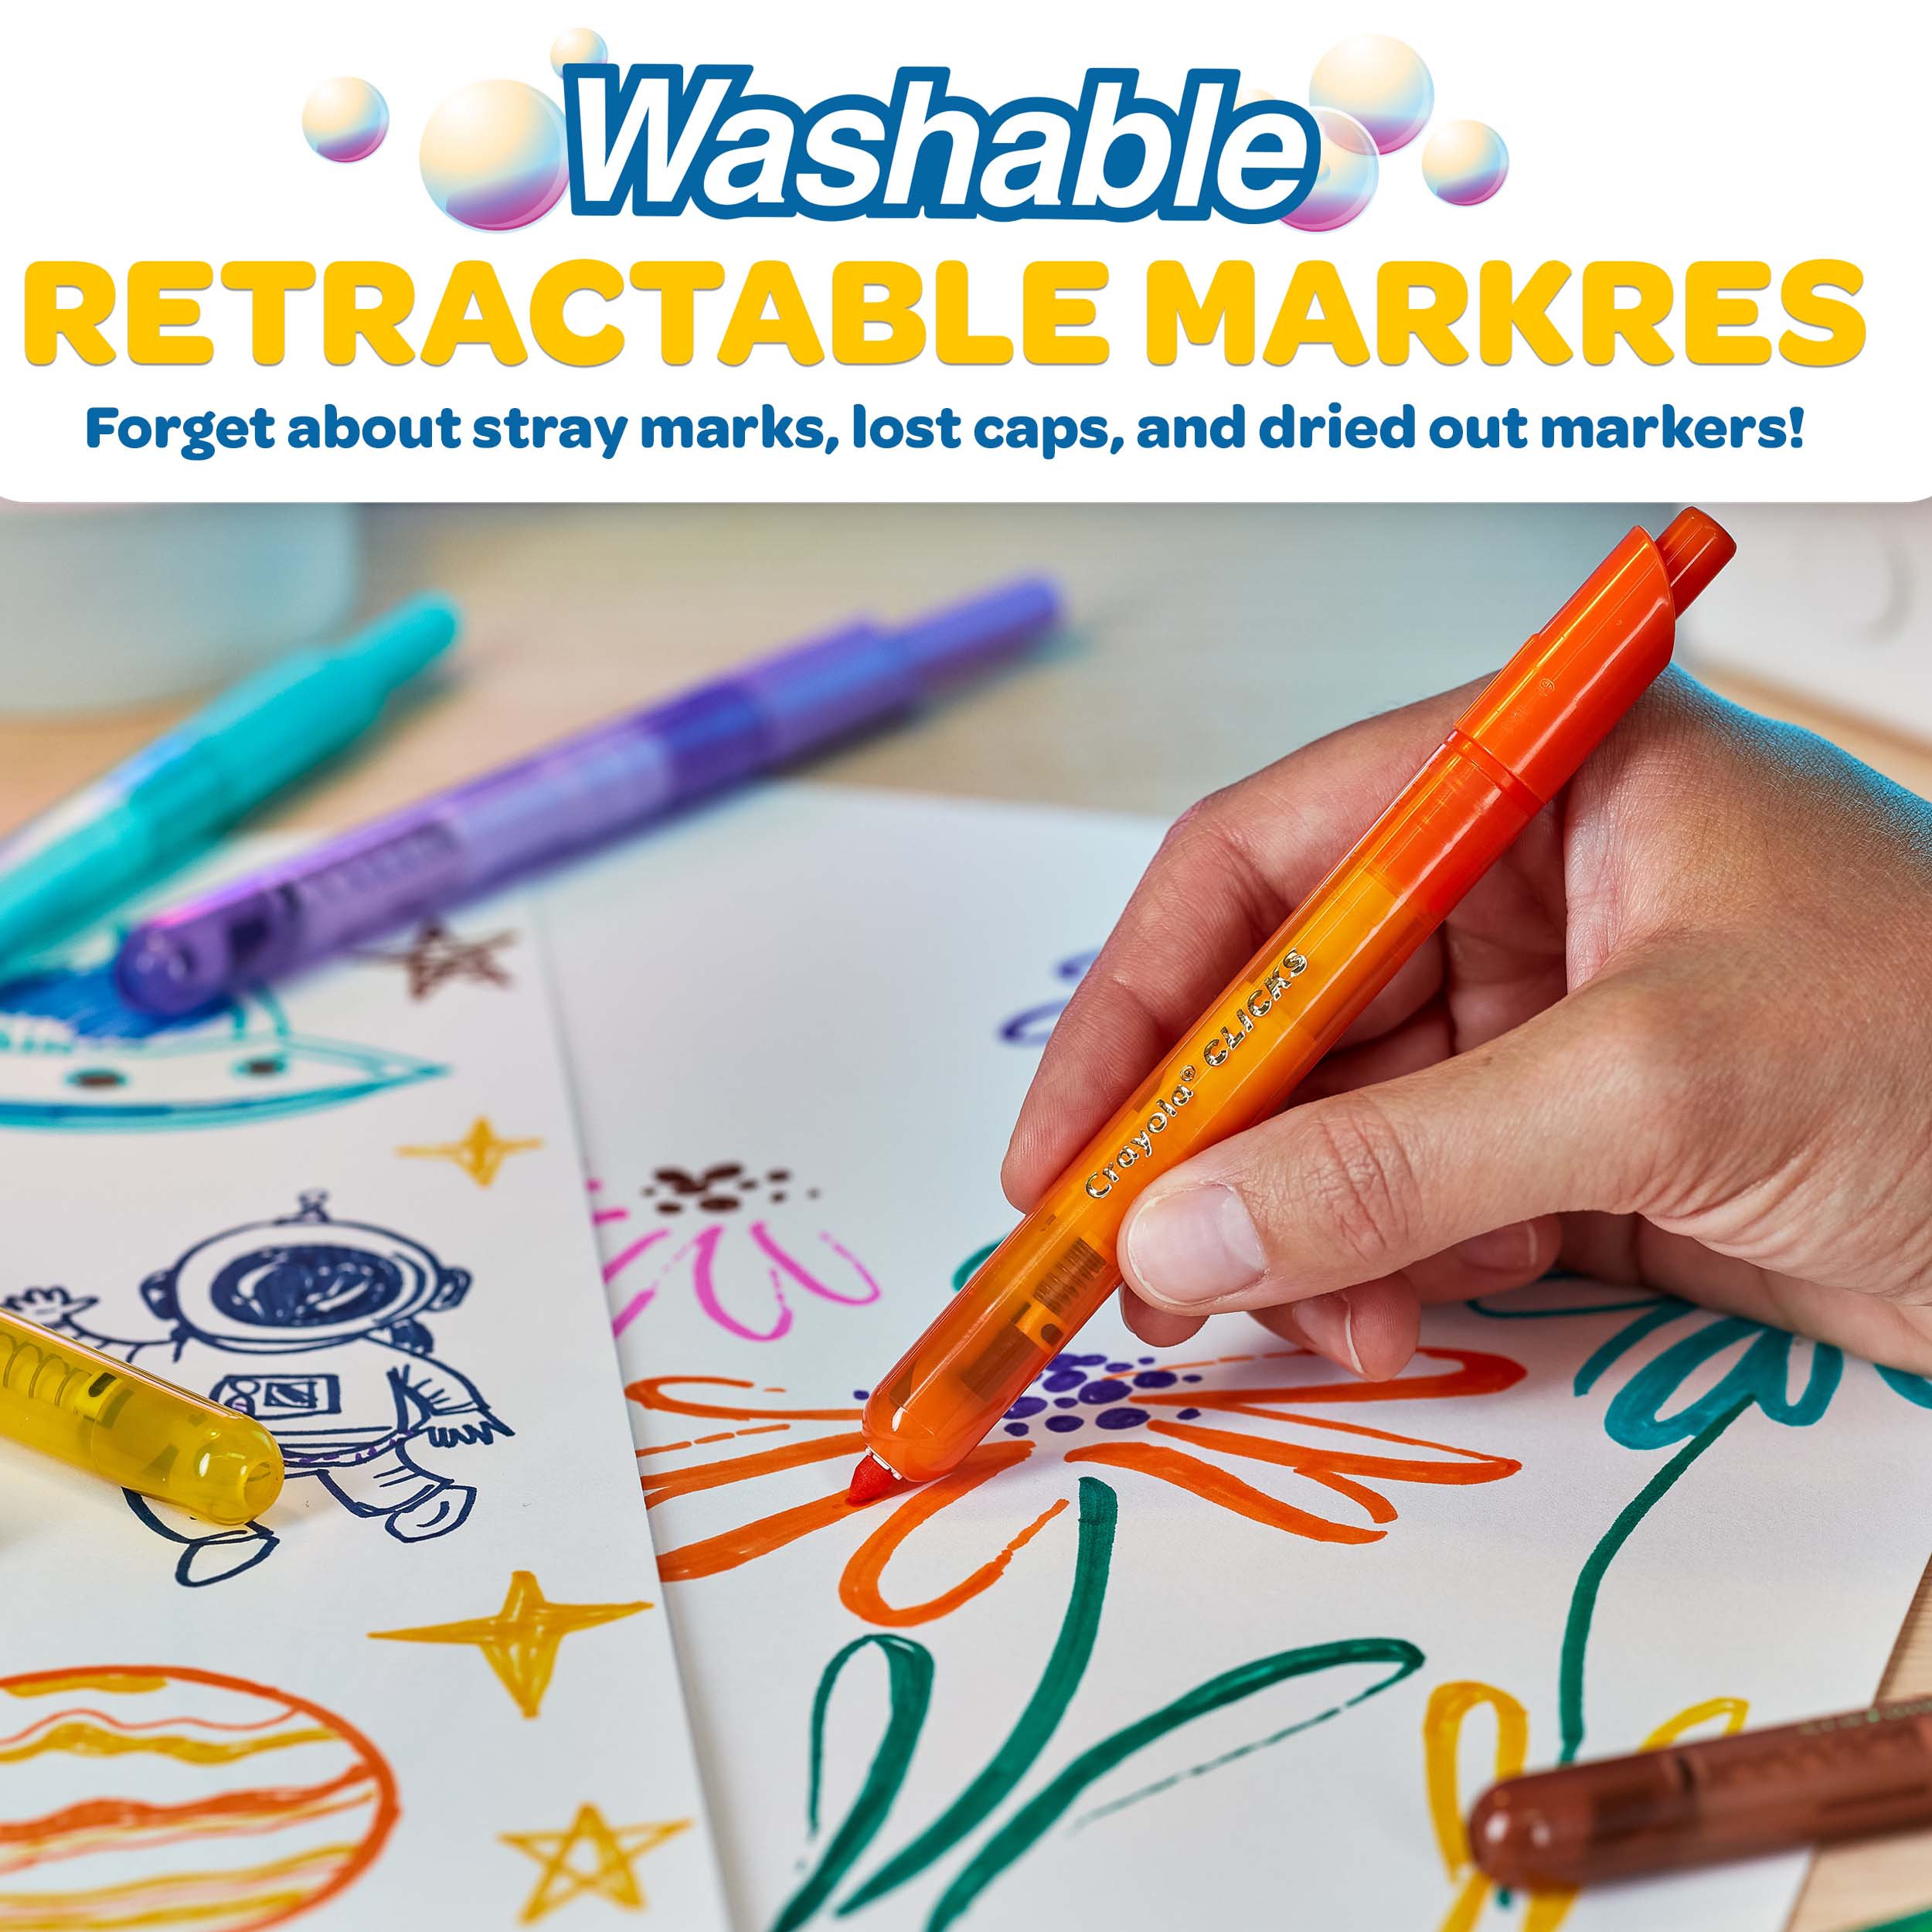 Crayola Washable Window Writers Markers, 10 Count – Crayola Canada